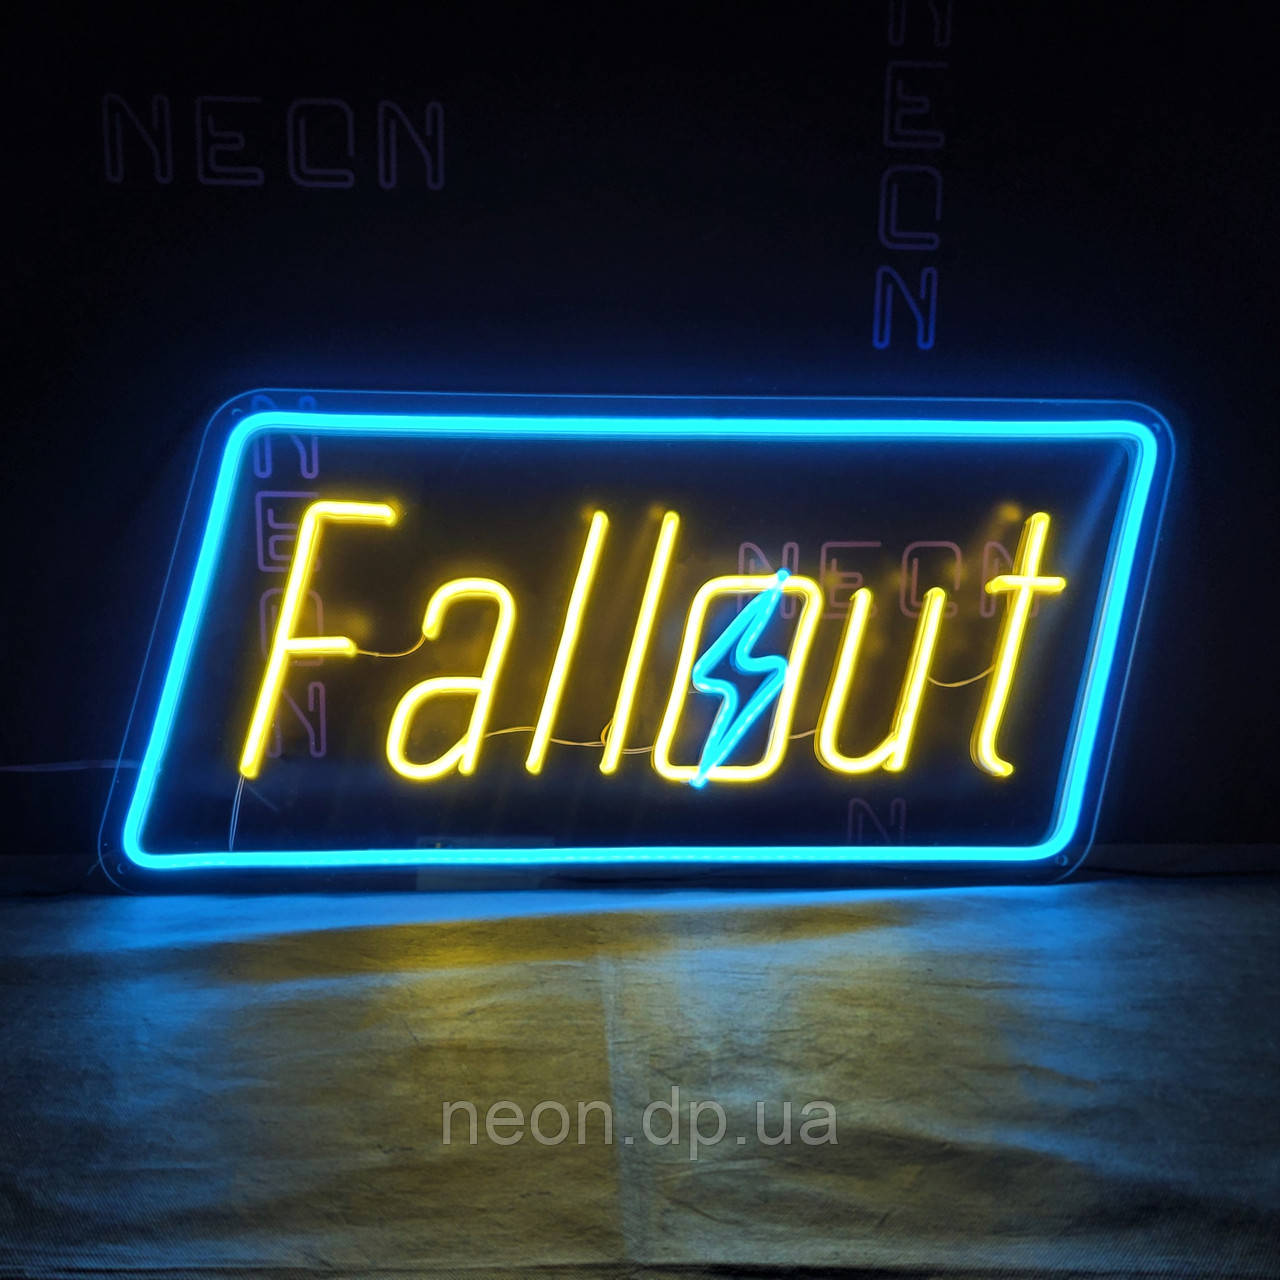 Неонова вивіска "Fallout"